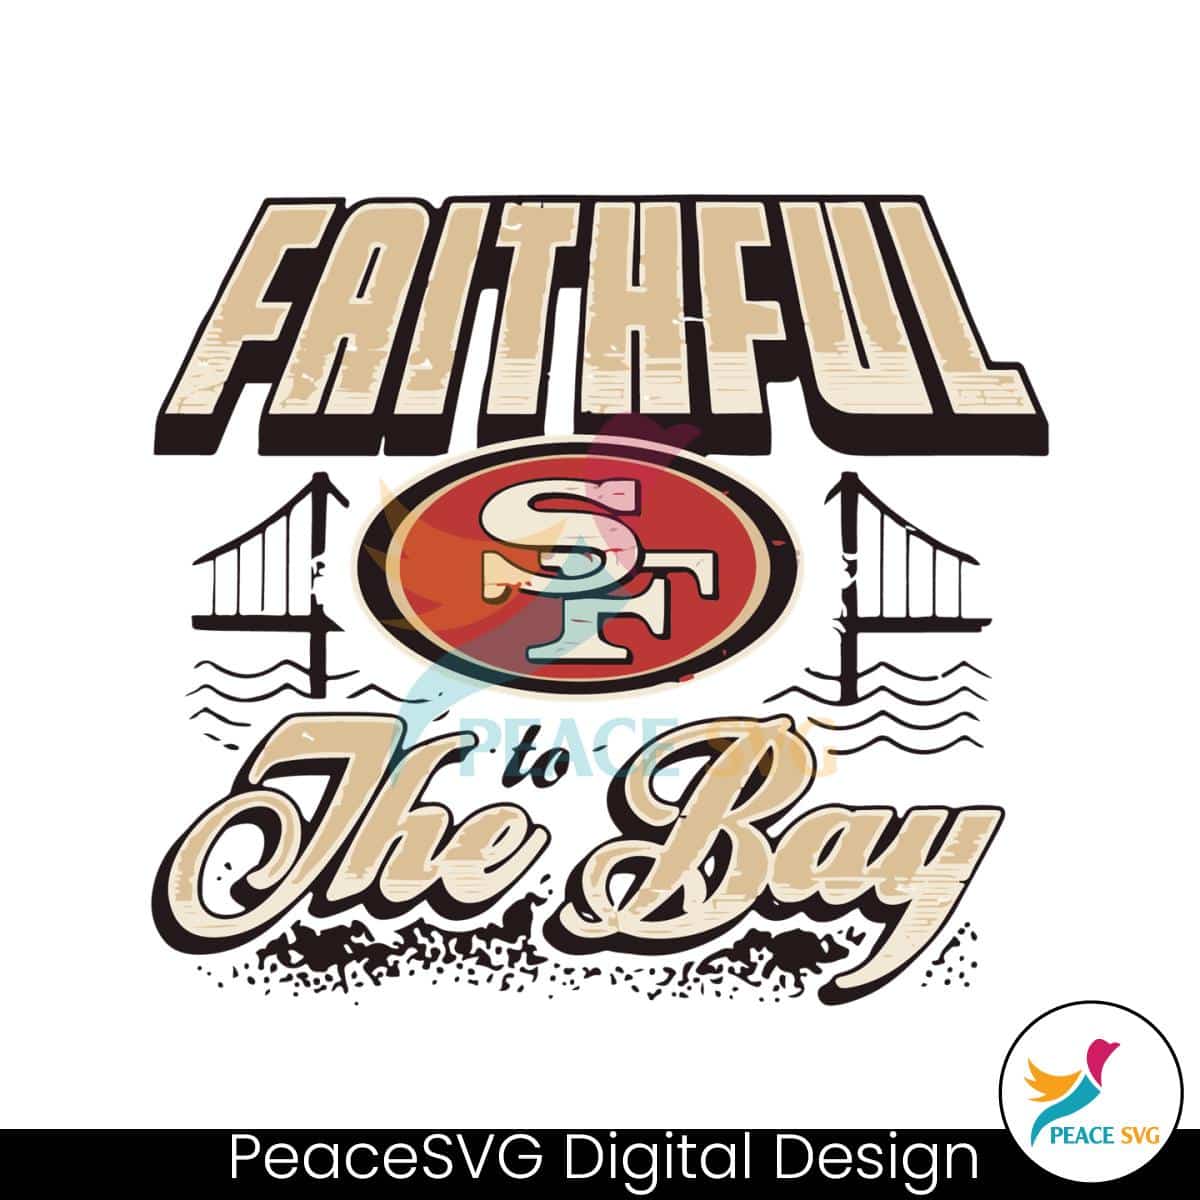 San Francisco 49ers Faithful To The Bay SVG